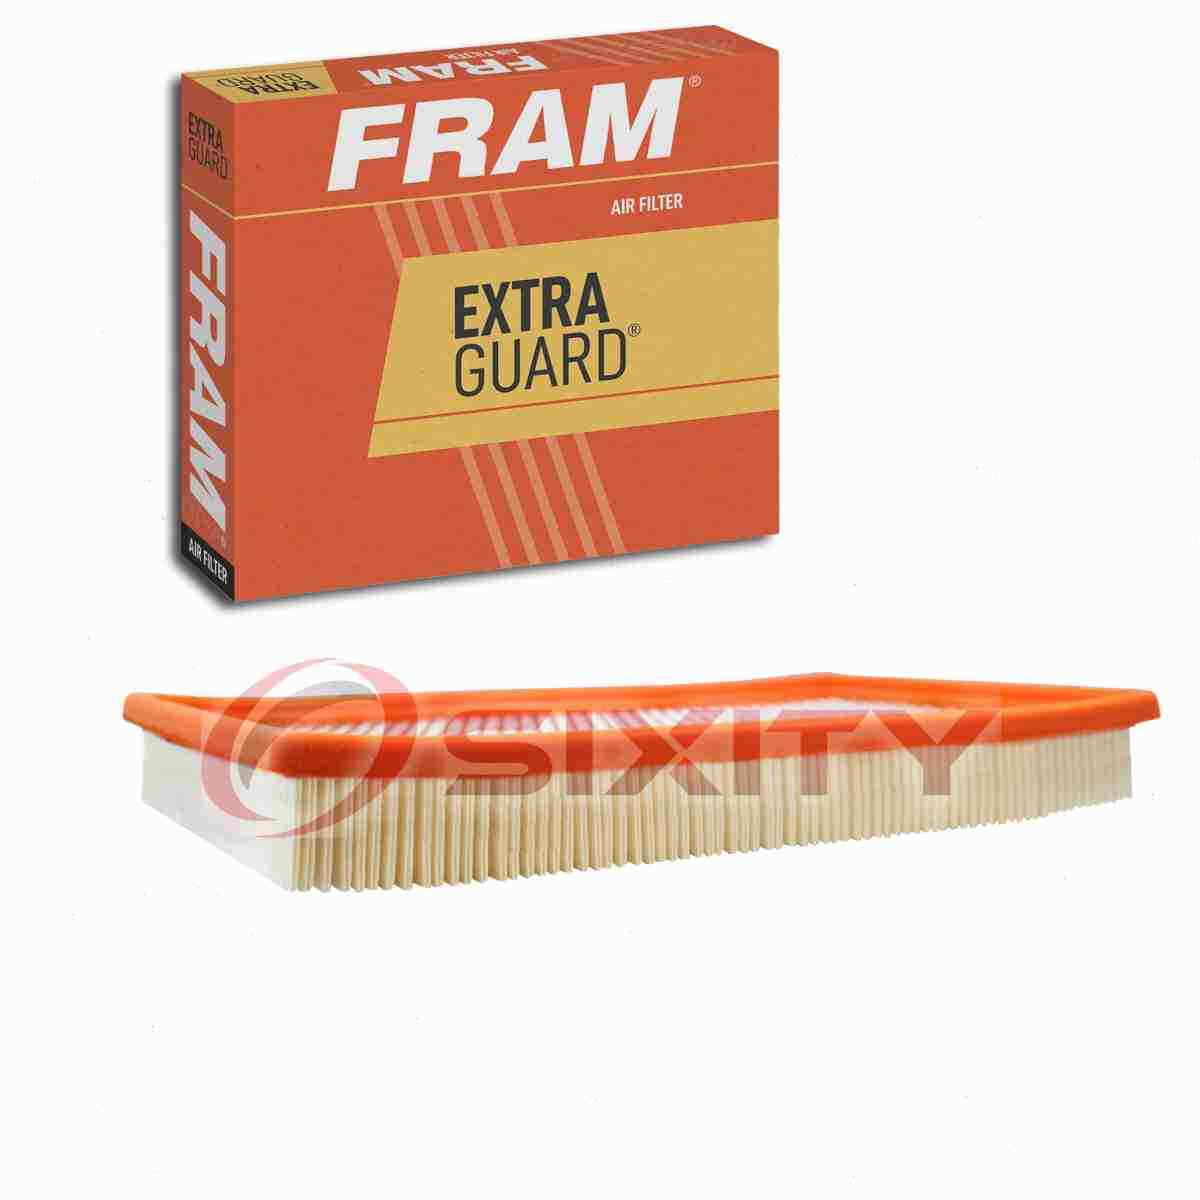 FRAM Extra Guard Air Filter for 1987-1989 Nissan Pulsar NX Intake Inlet kn